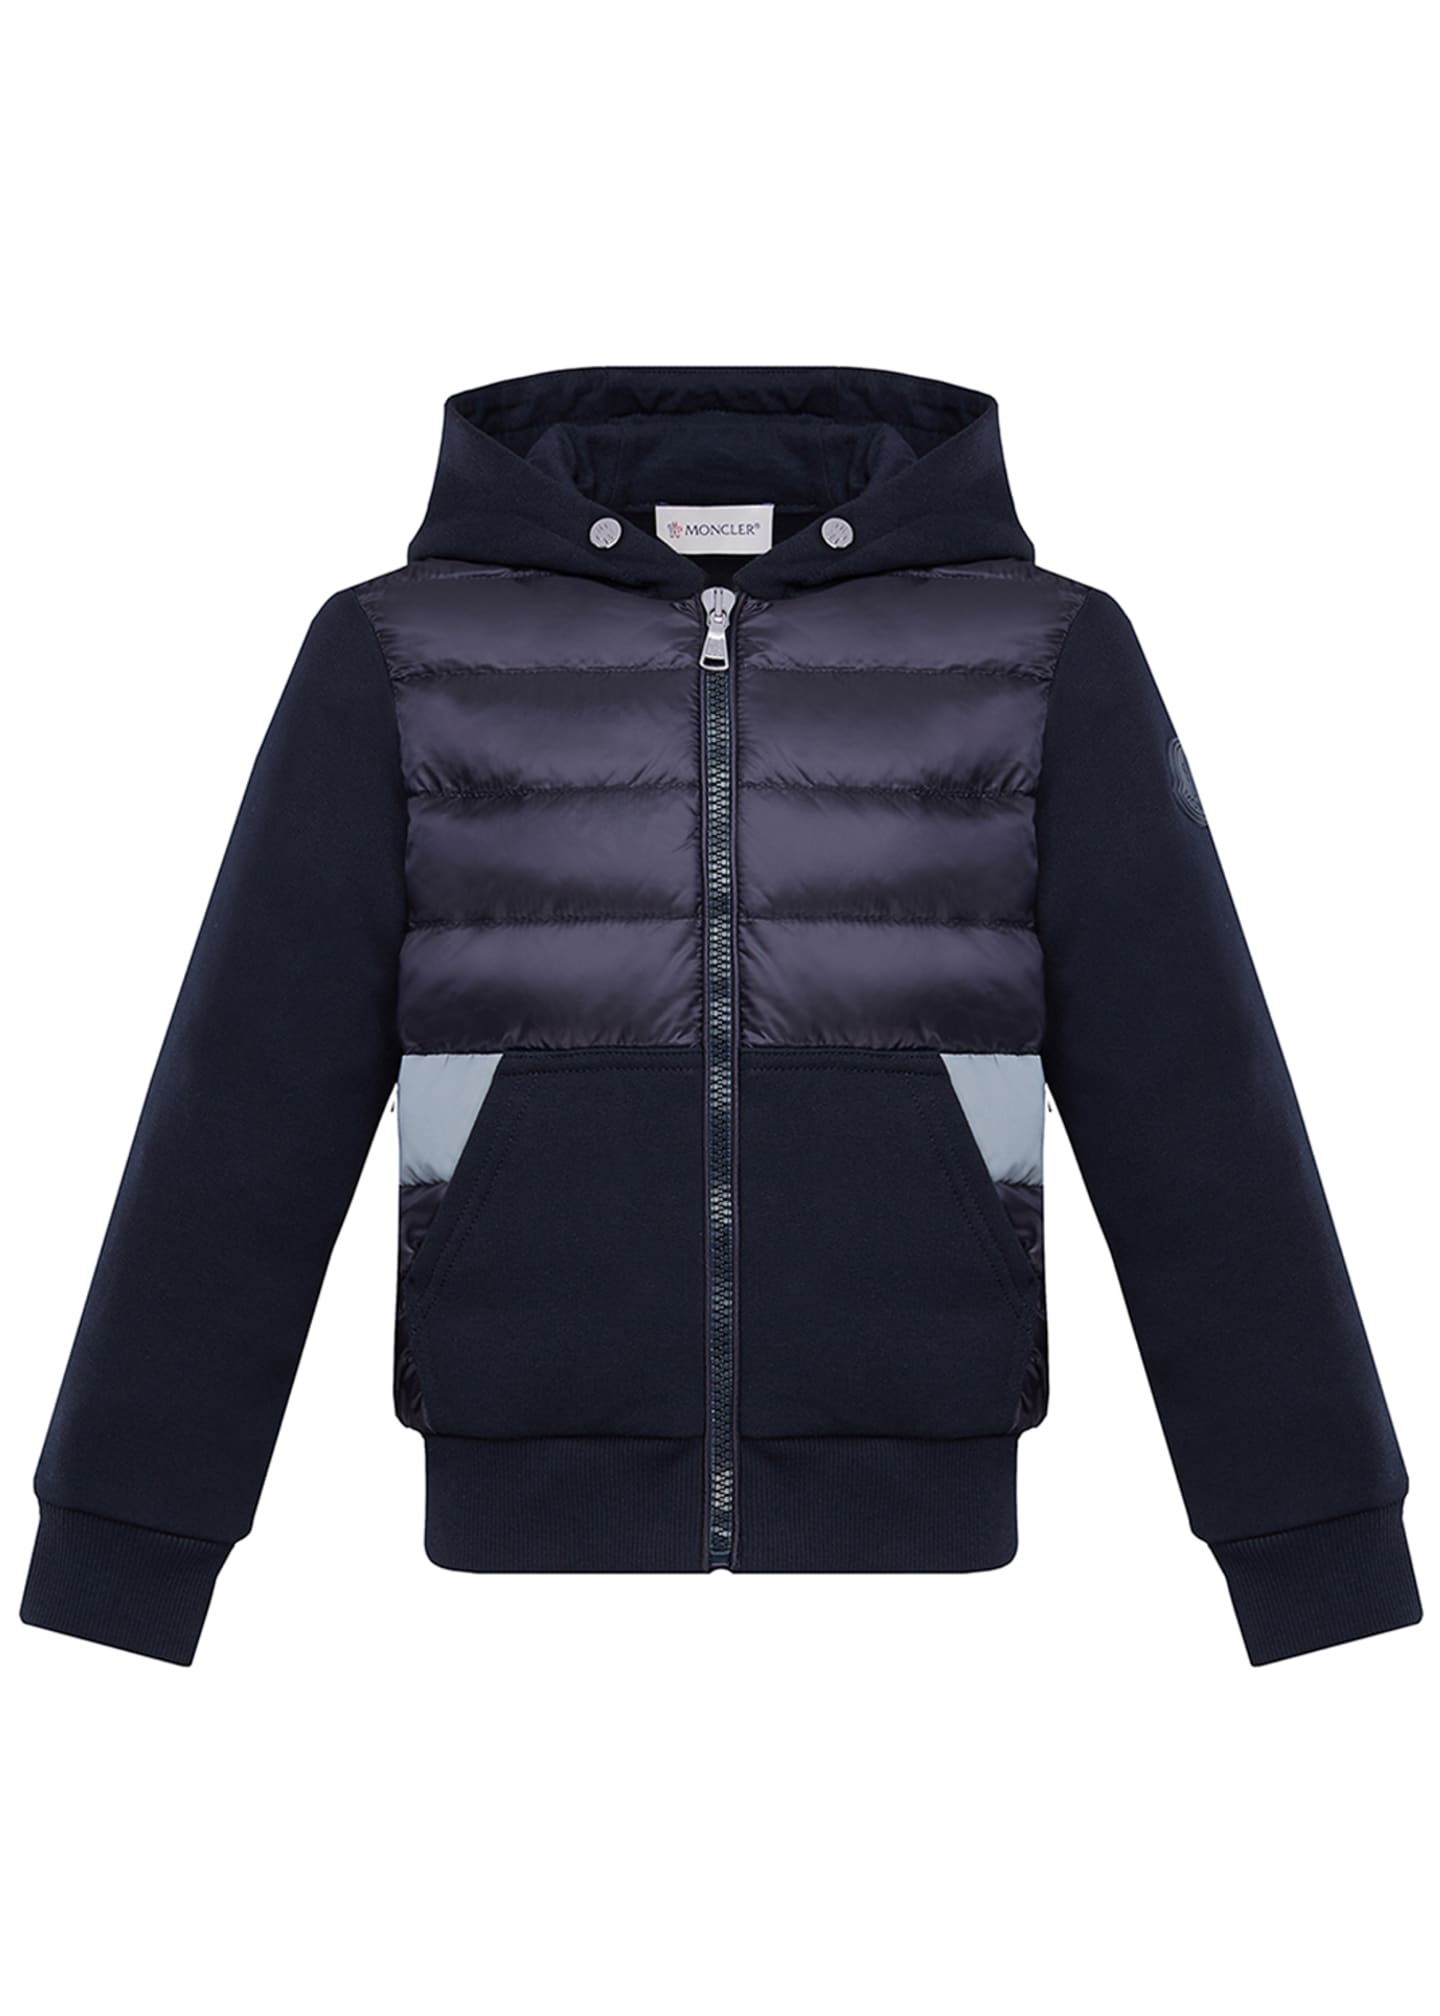 moncler jacket size 6